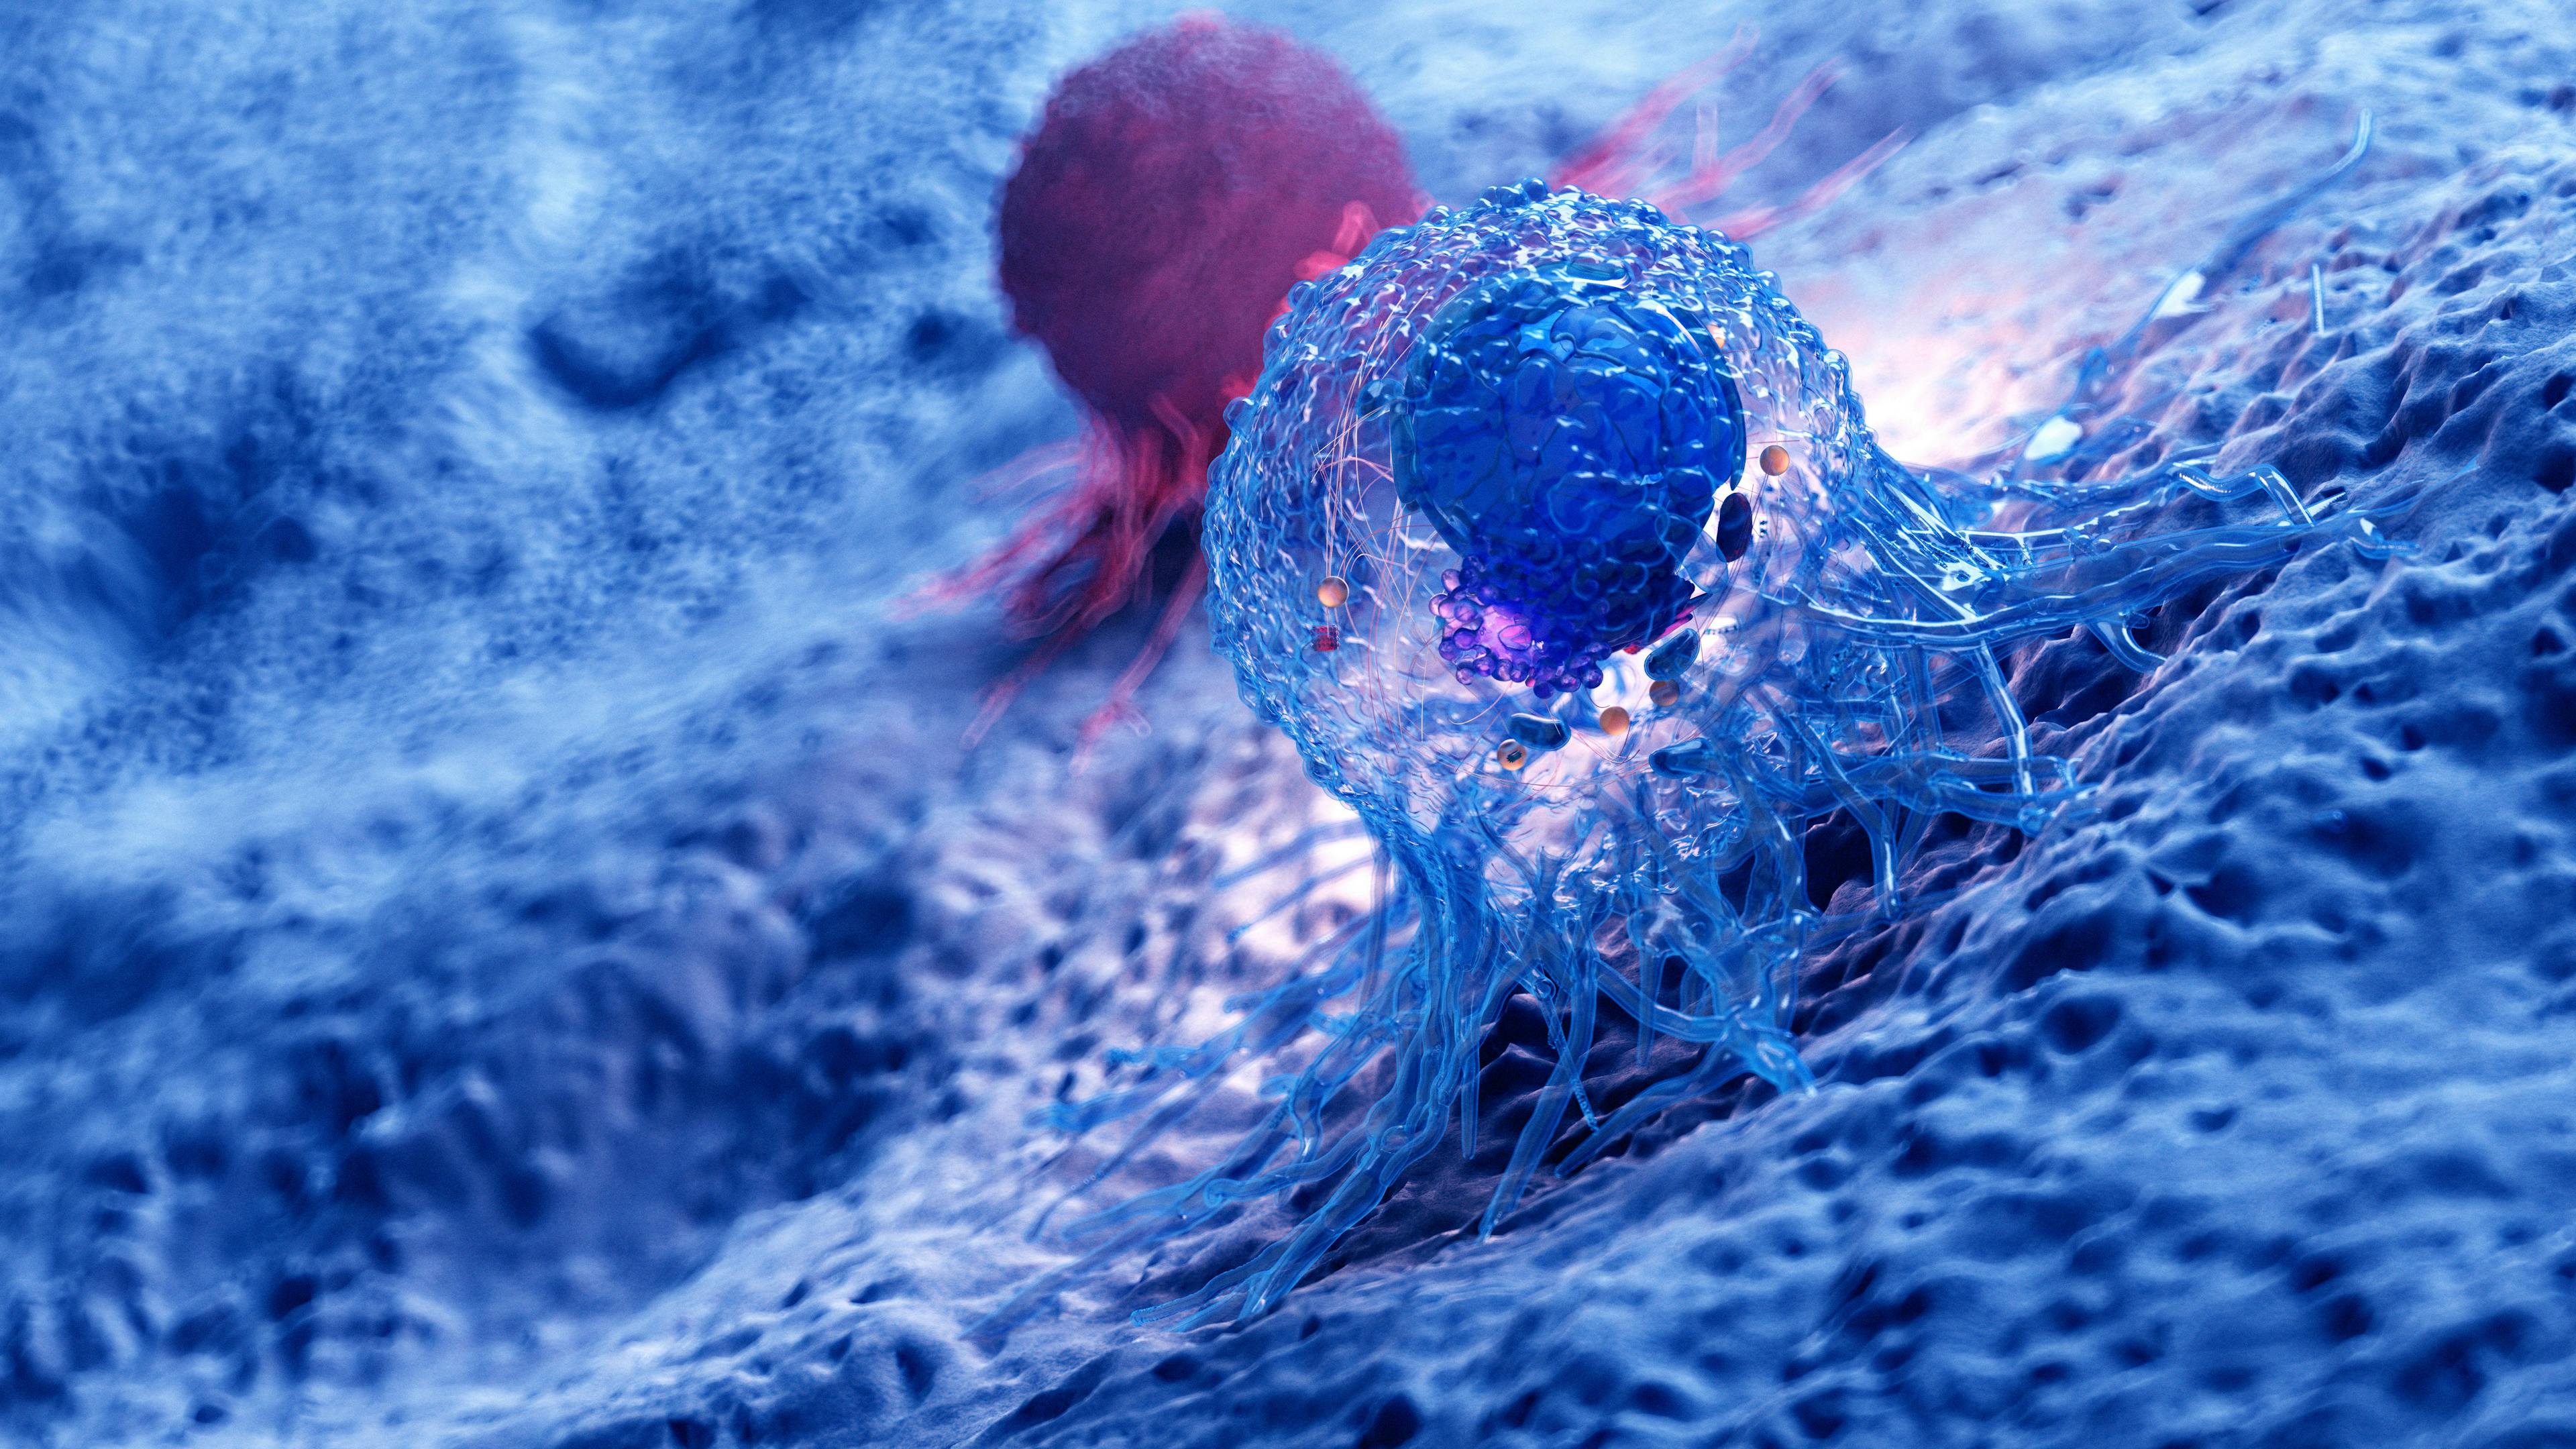 3D illustration of the cancer cells -- Image credit: SciePro | stock.adobe.com